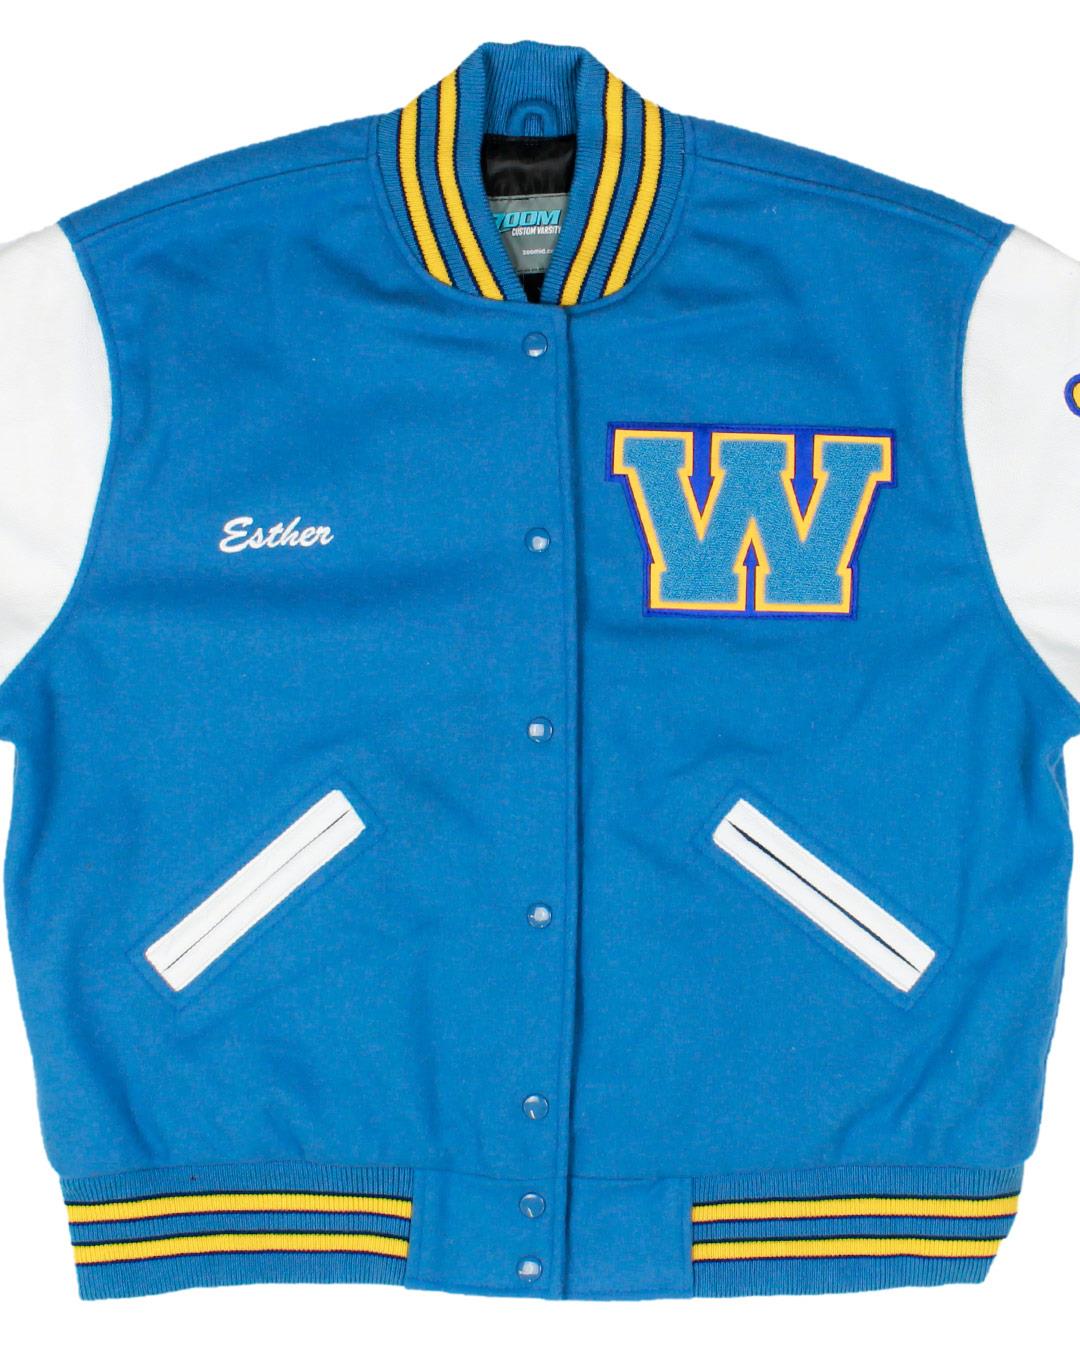 Walnut High School Letterman Jacket, Walnut, CA - Front